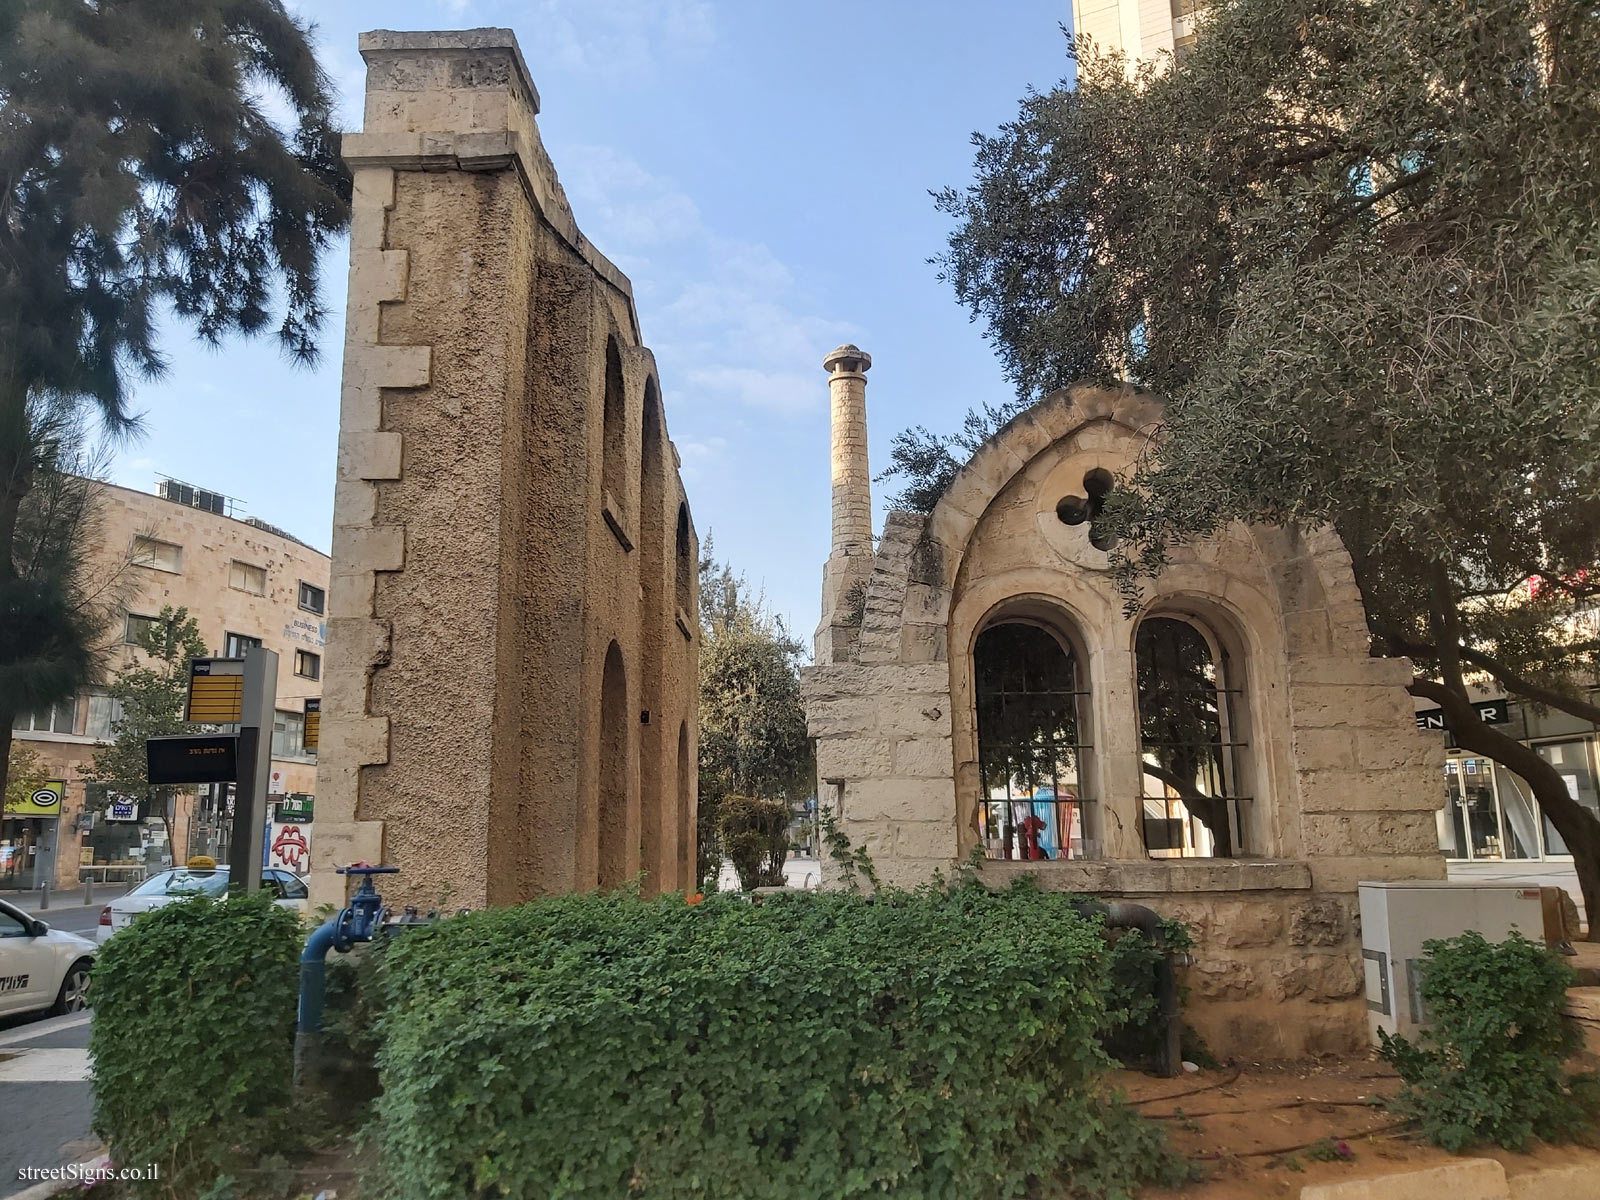 Jerusalem - Talitha-Kumi building - King George/Ben Yehuda, Jerusalem, Israel